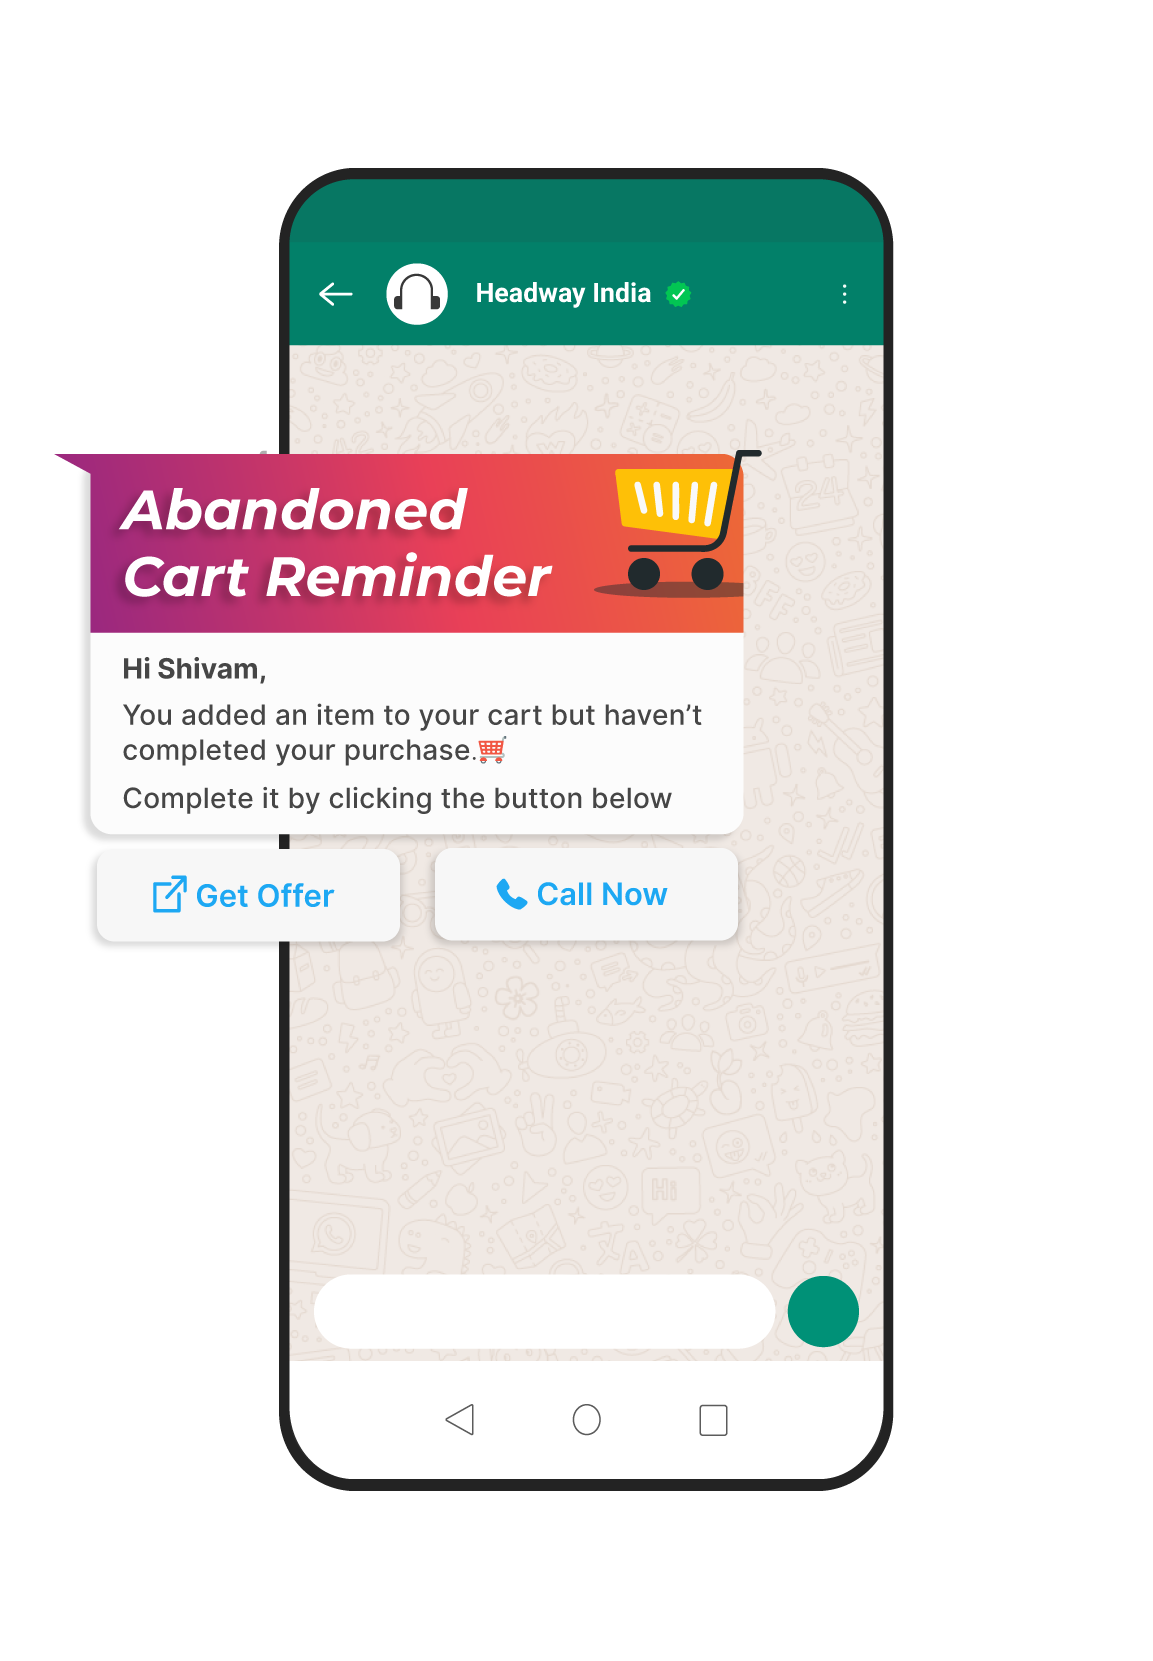 Marketing+Support on WhatsApp - Send abandoned cart notifications